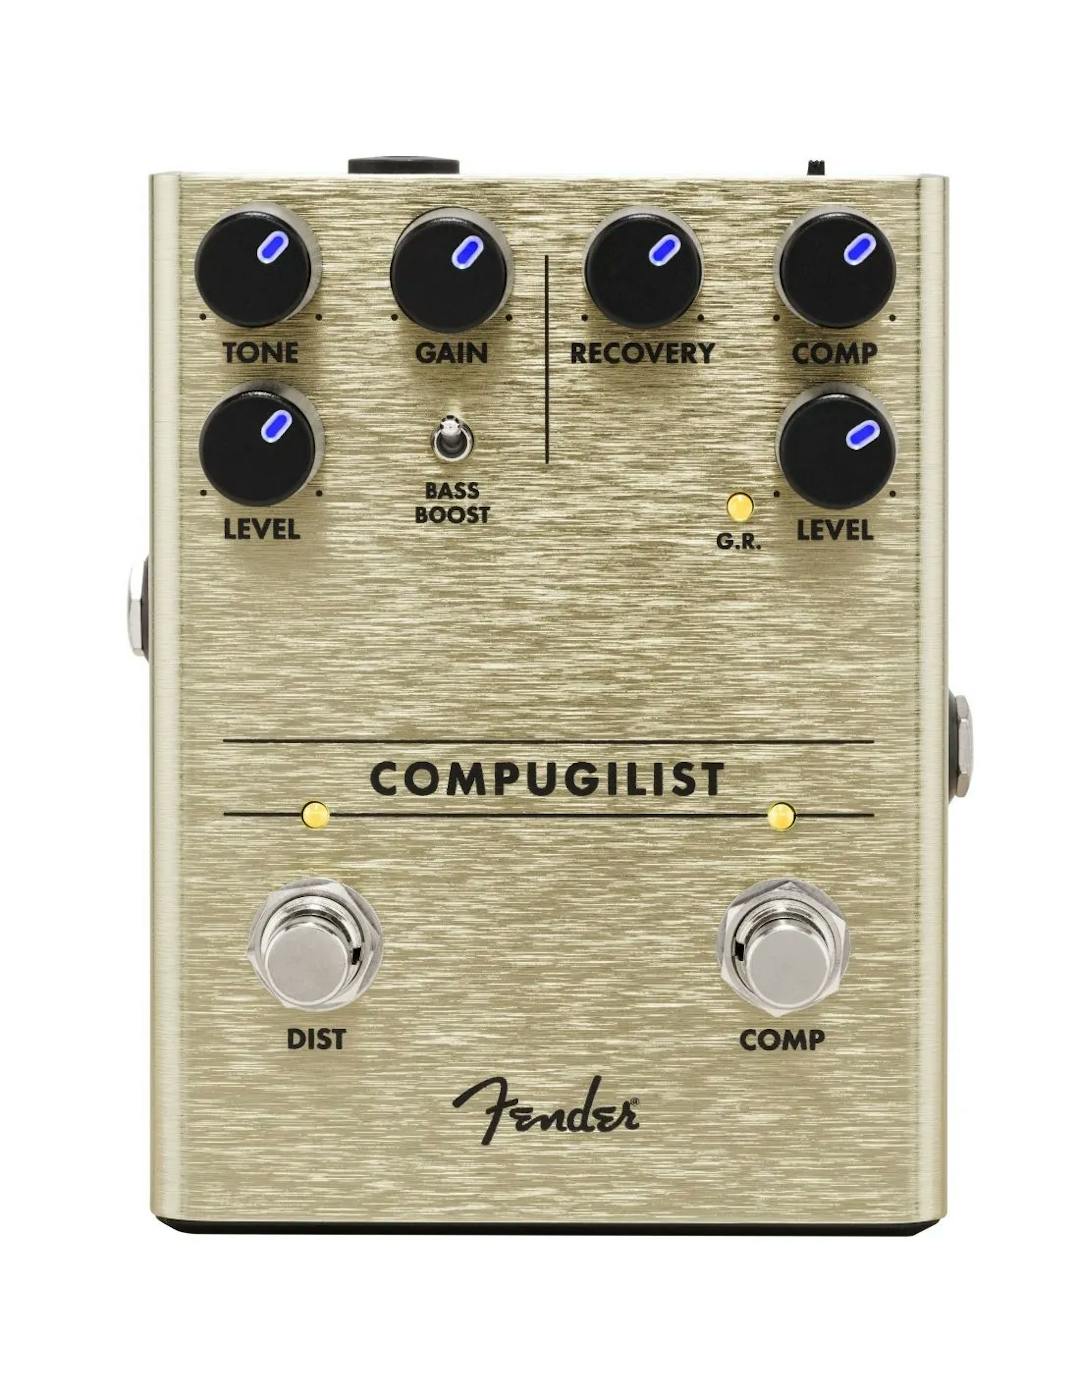 Compugilist Compressor/Distortion Guitar Pedal By Fender